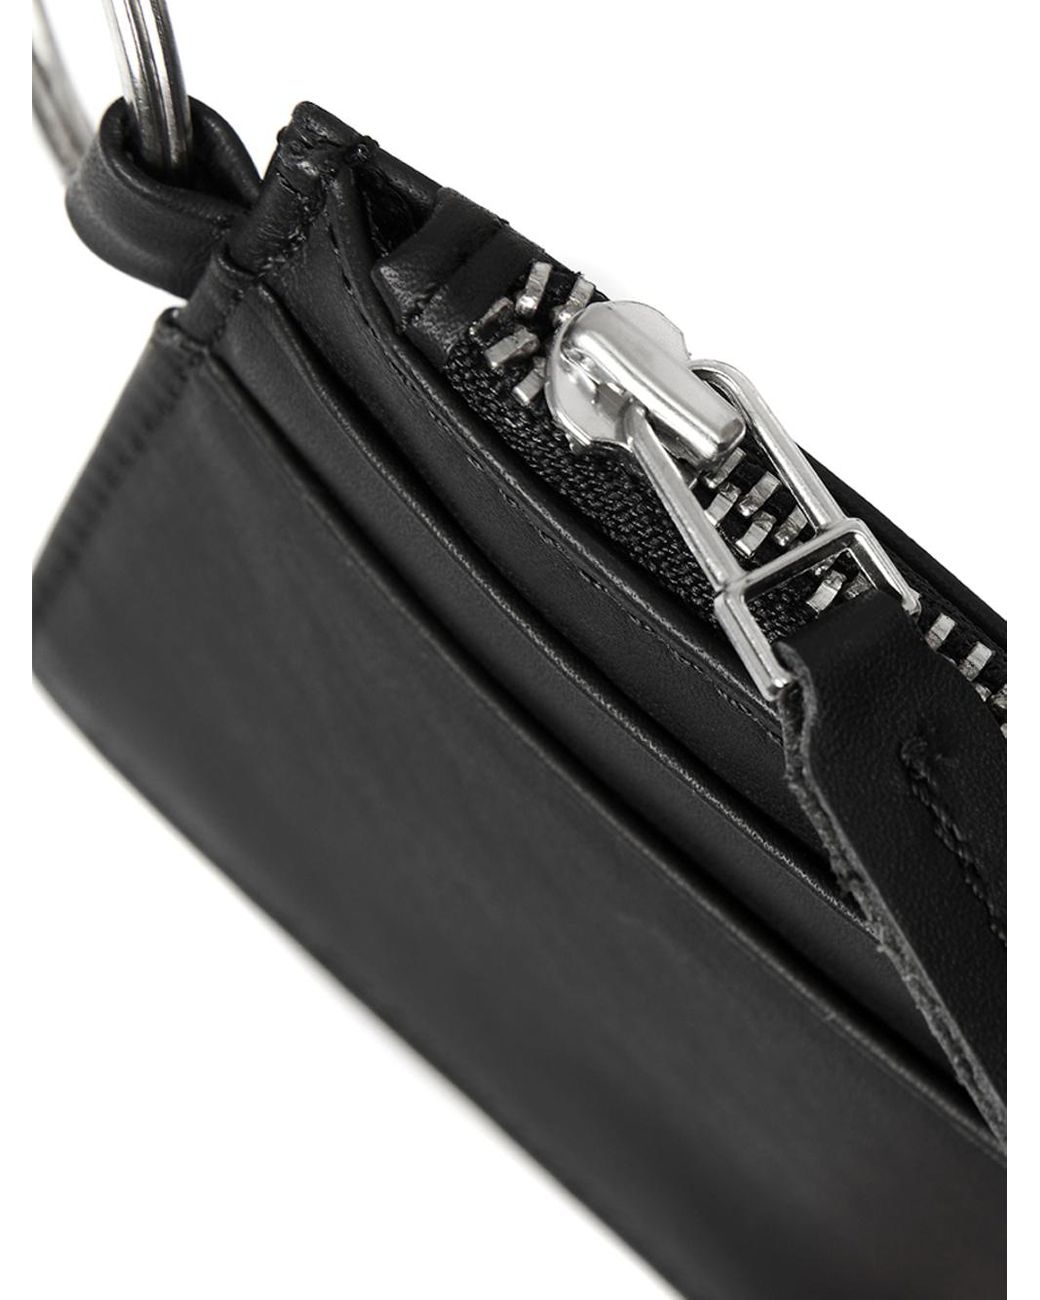 Carhartt WIP Leather Wallet Black for Men | Lyst